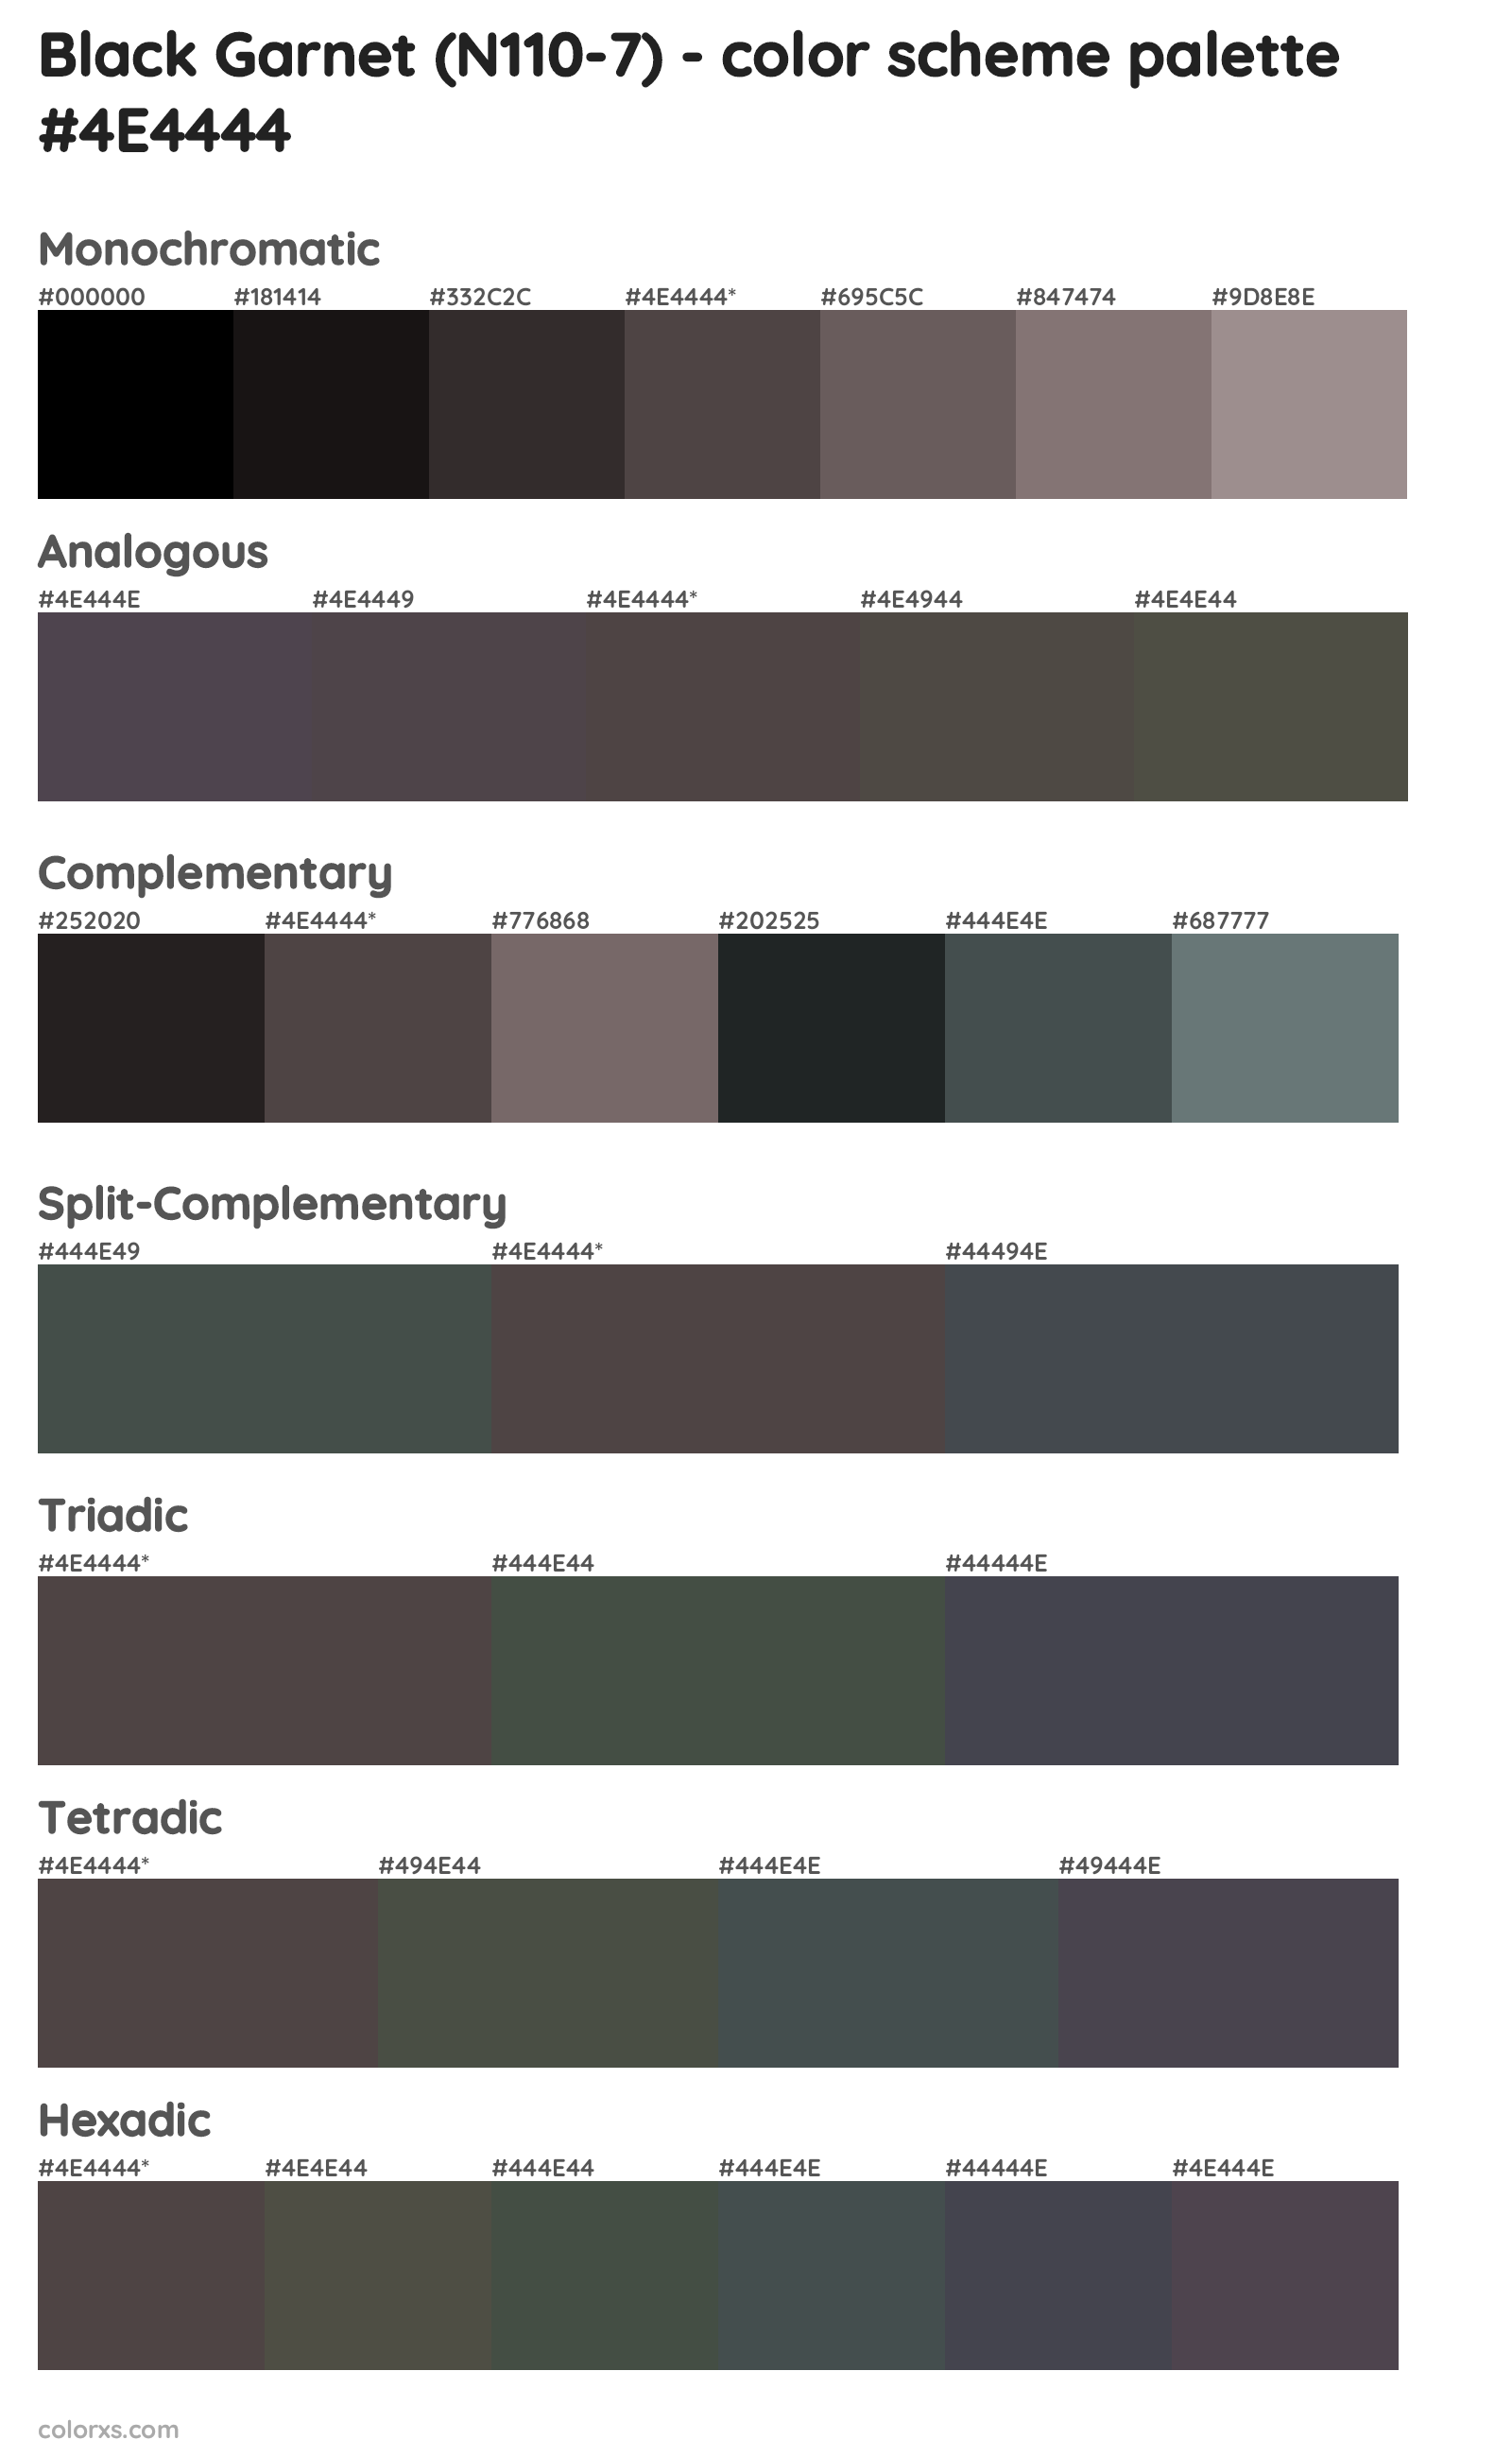 Black Garnet (N110-7) Color Scheme Palettes